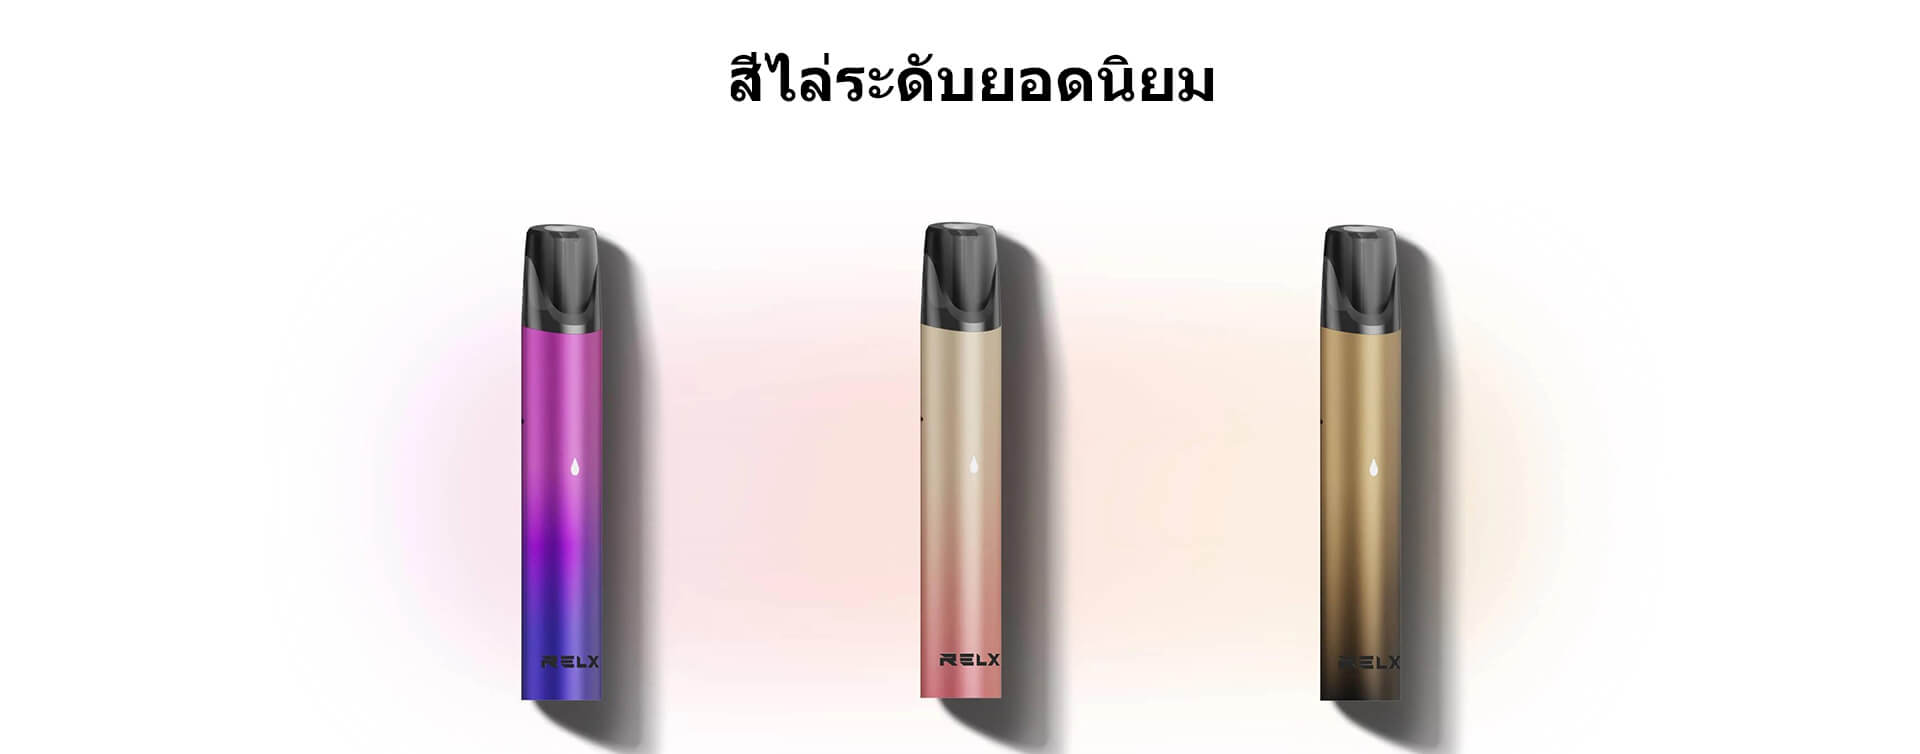 RELX Phantom รุ่นใหม่ 5th Generation​ | RELX Thailand RELX Classic Device | อุปกรณ์คลาสสิก RELX - สุริยุปราคา